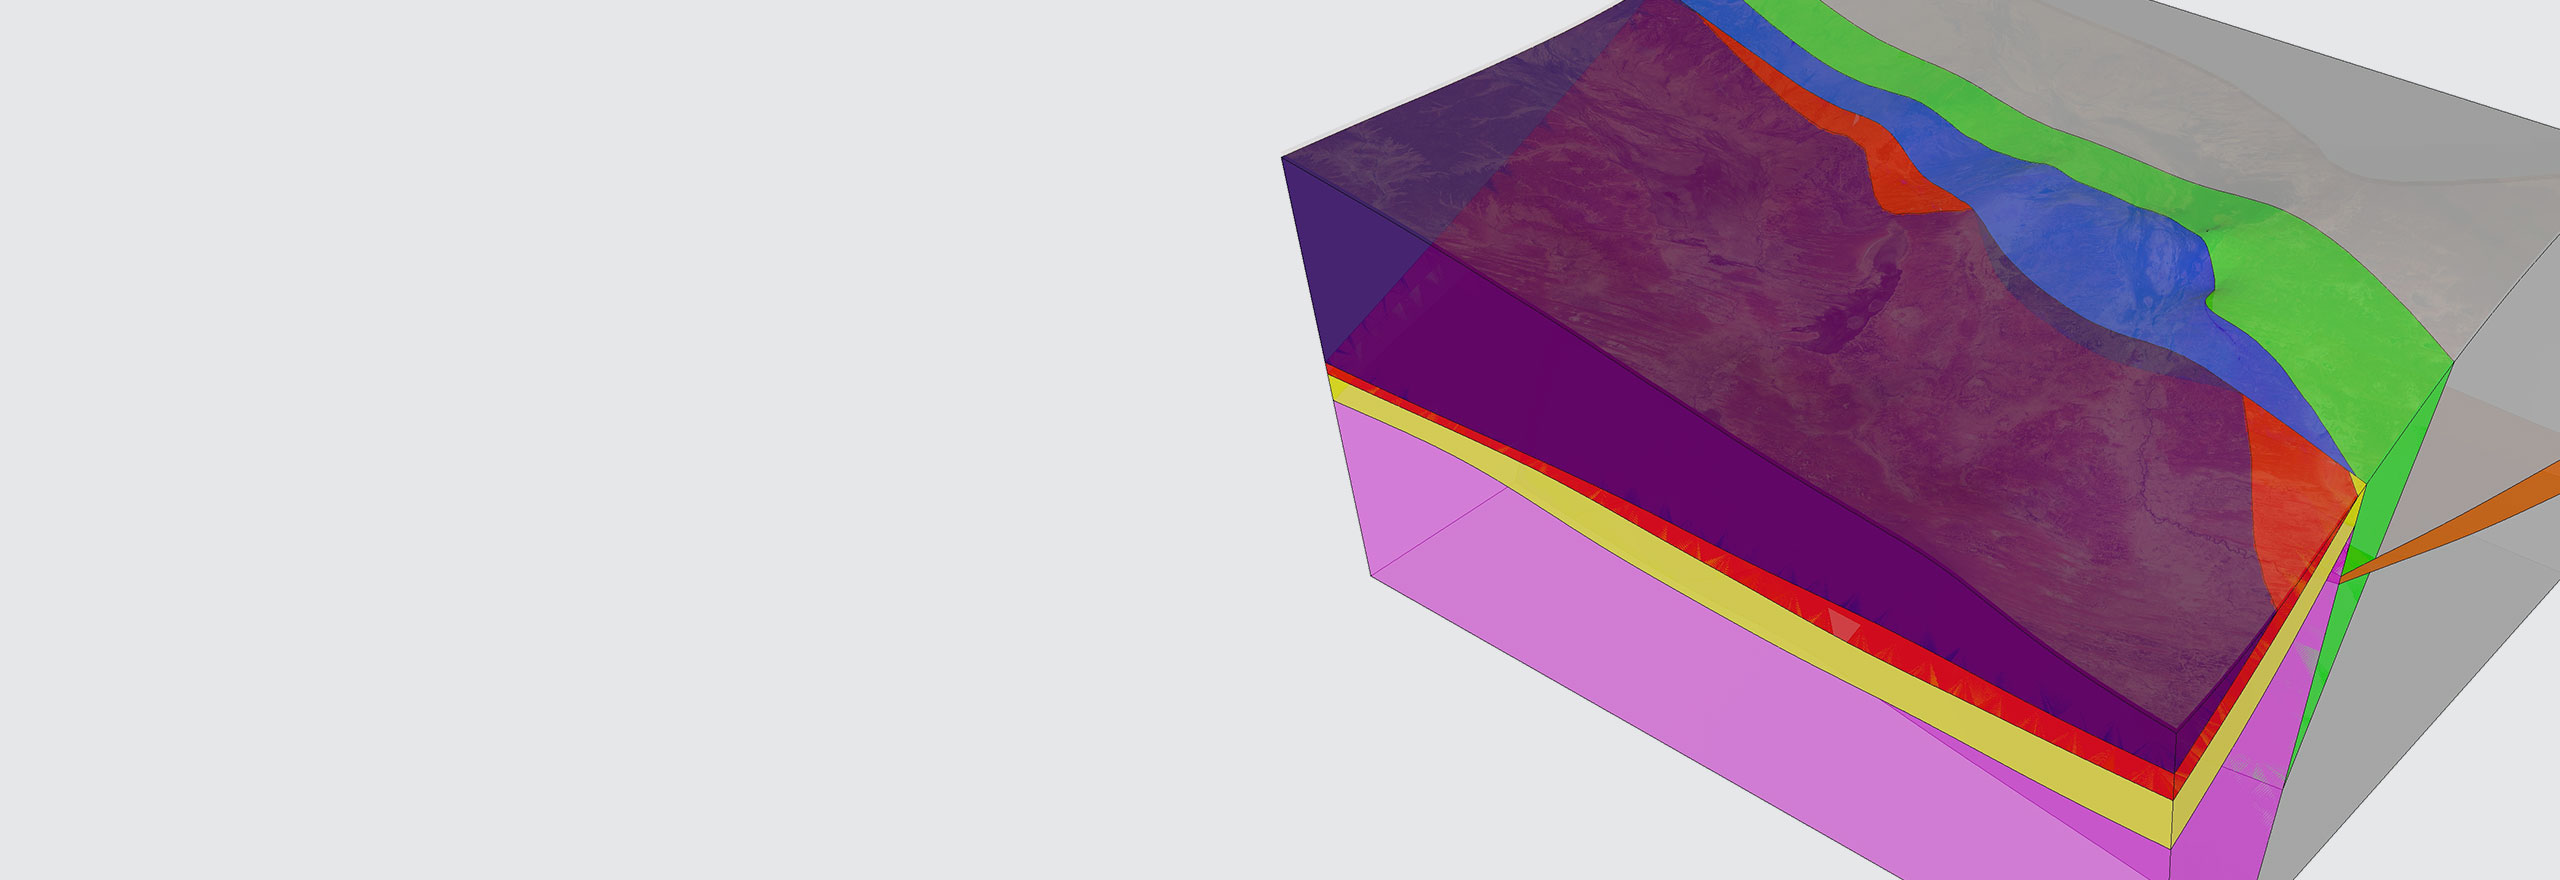 Hexagonの鉱山地質調査ソフトウェアによって作成された地質工学モデル